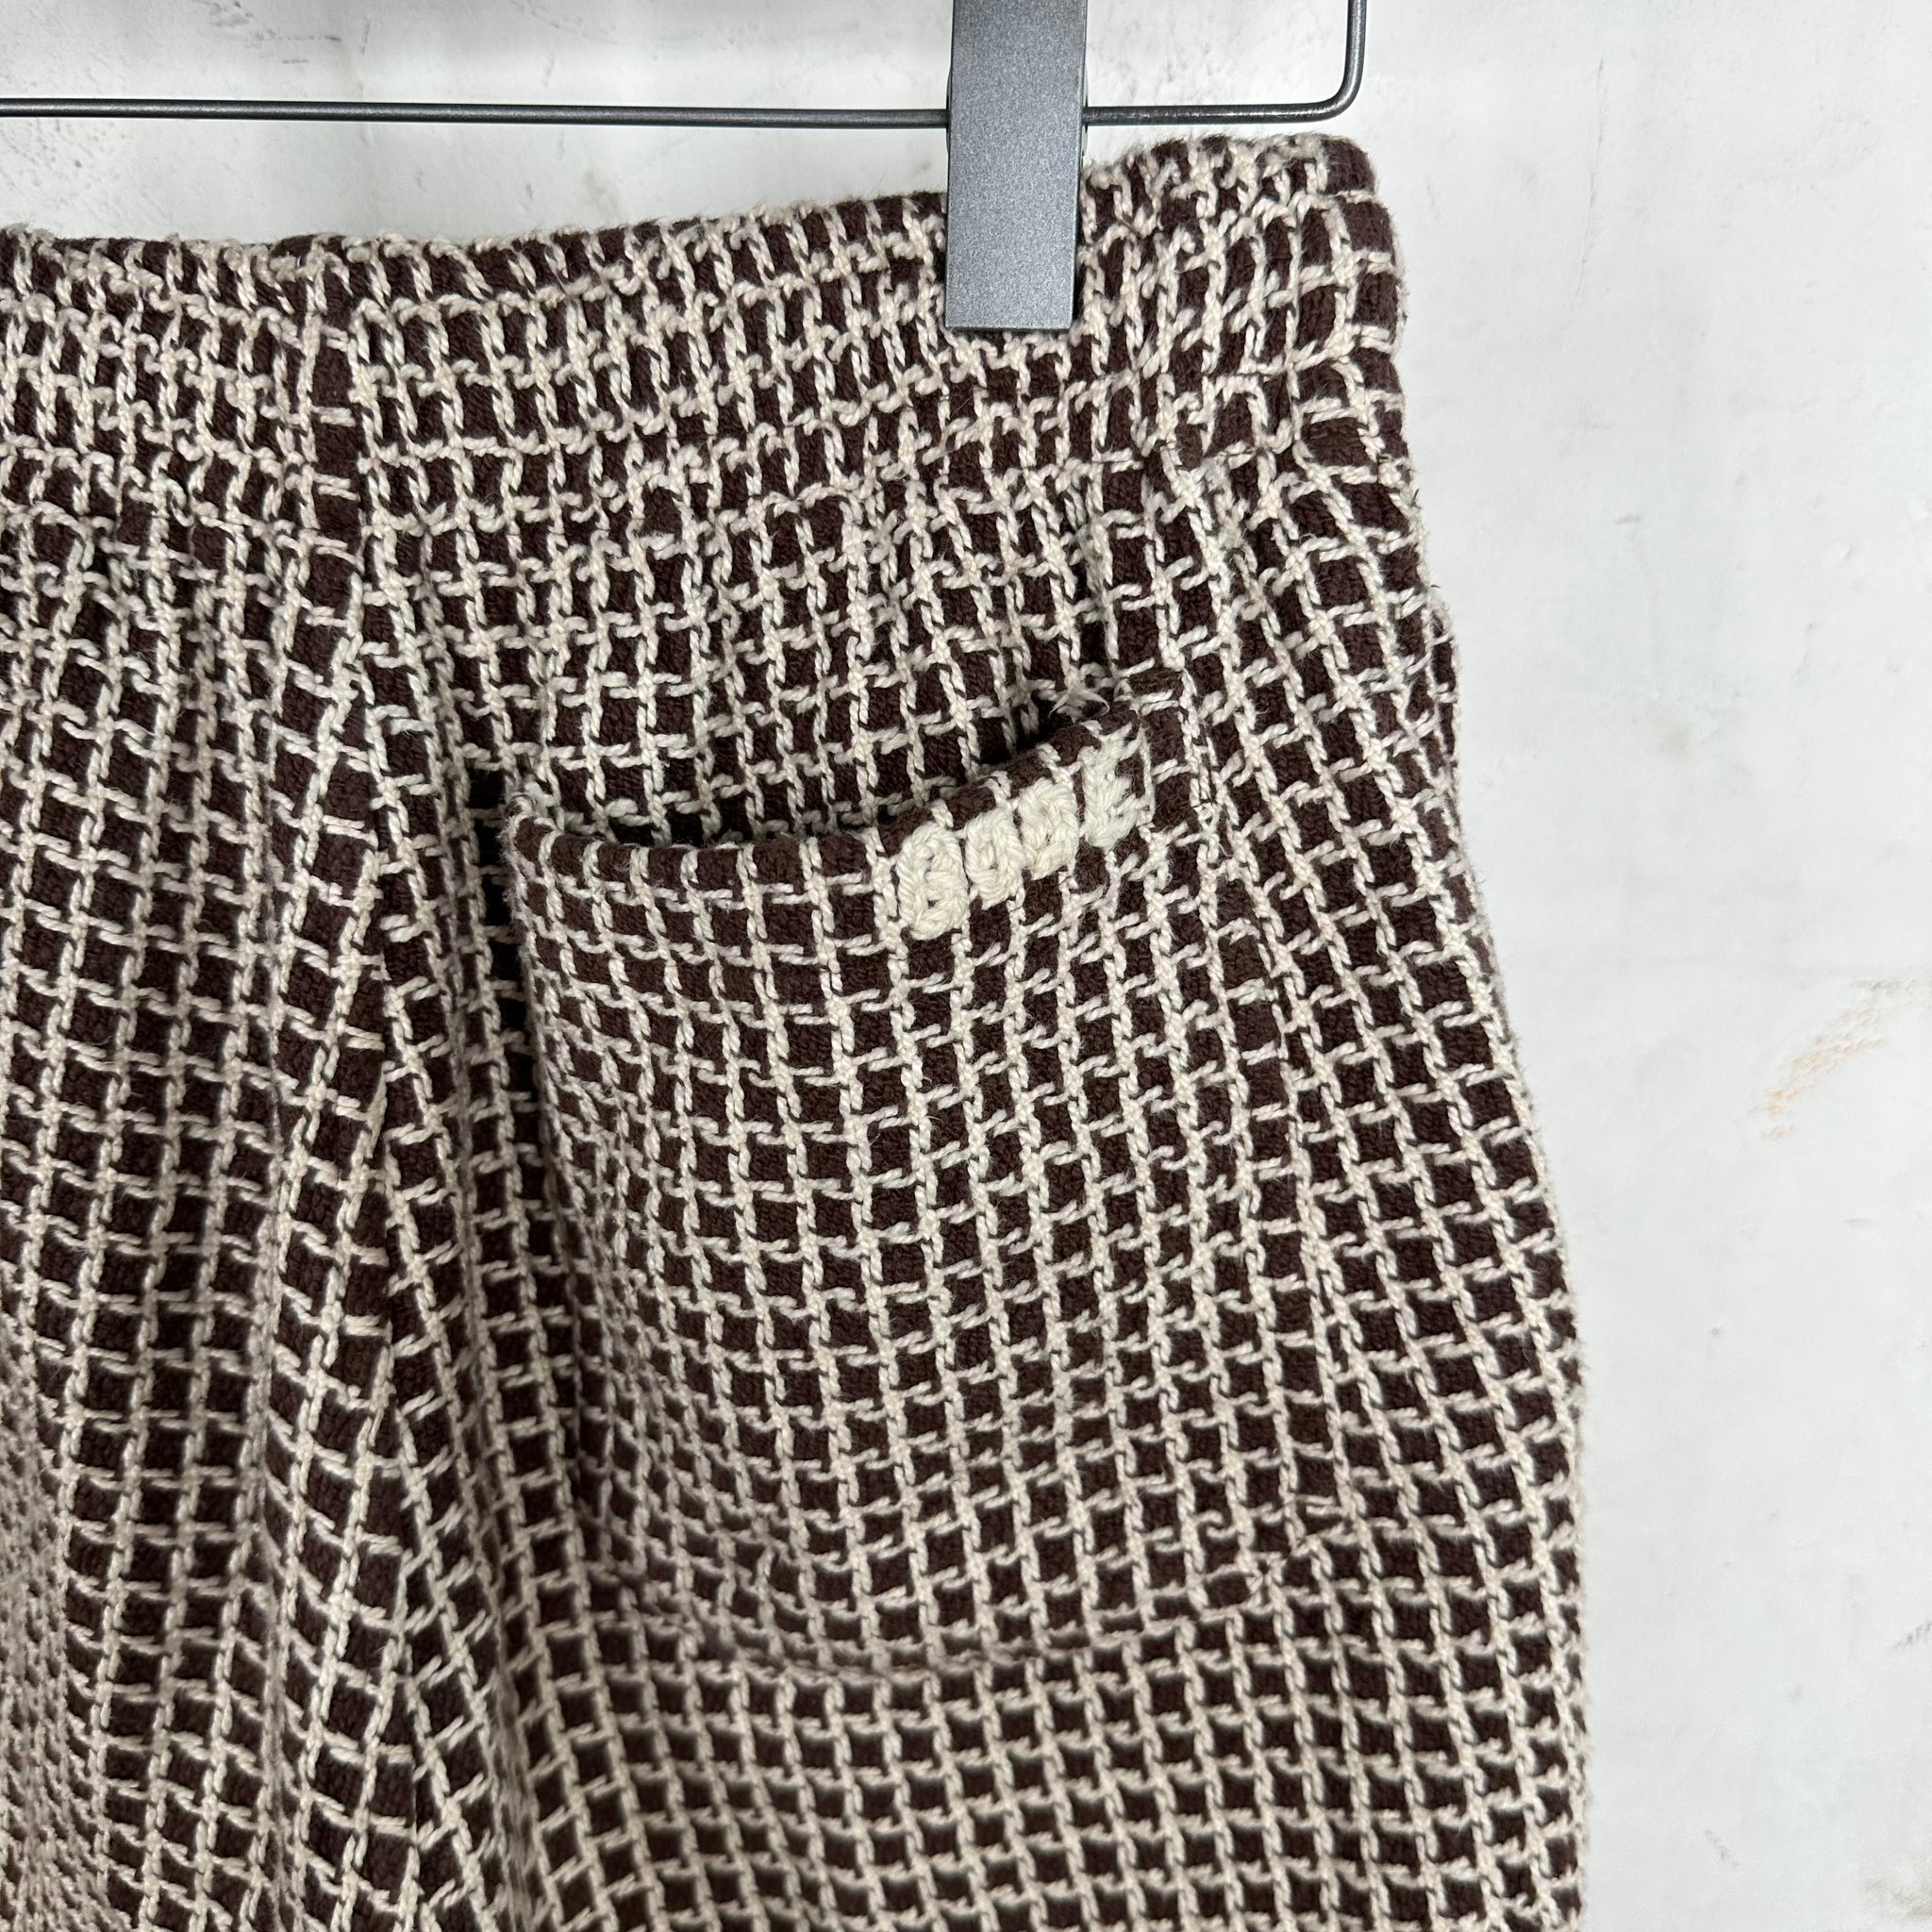 Bode Brown Knit Shorts